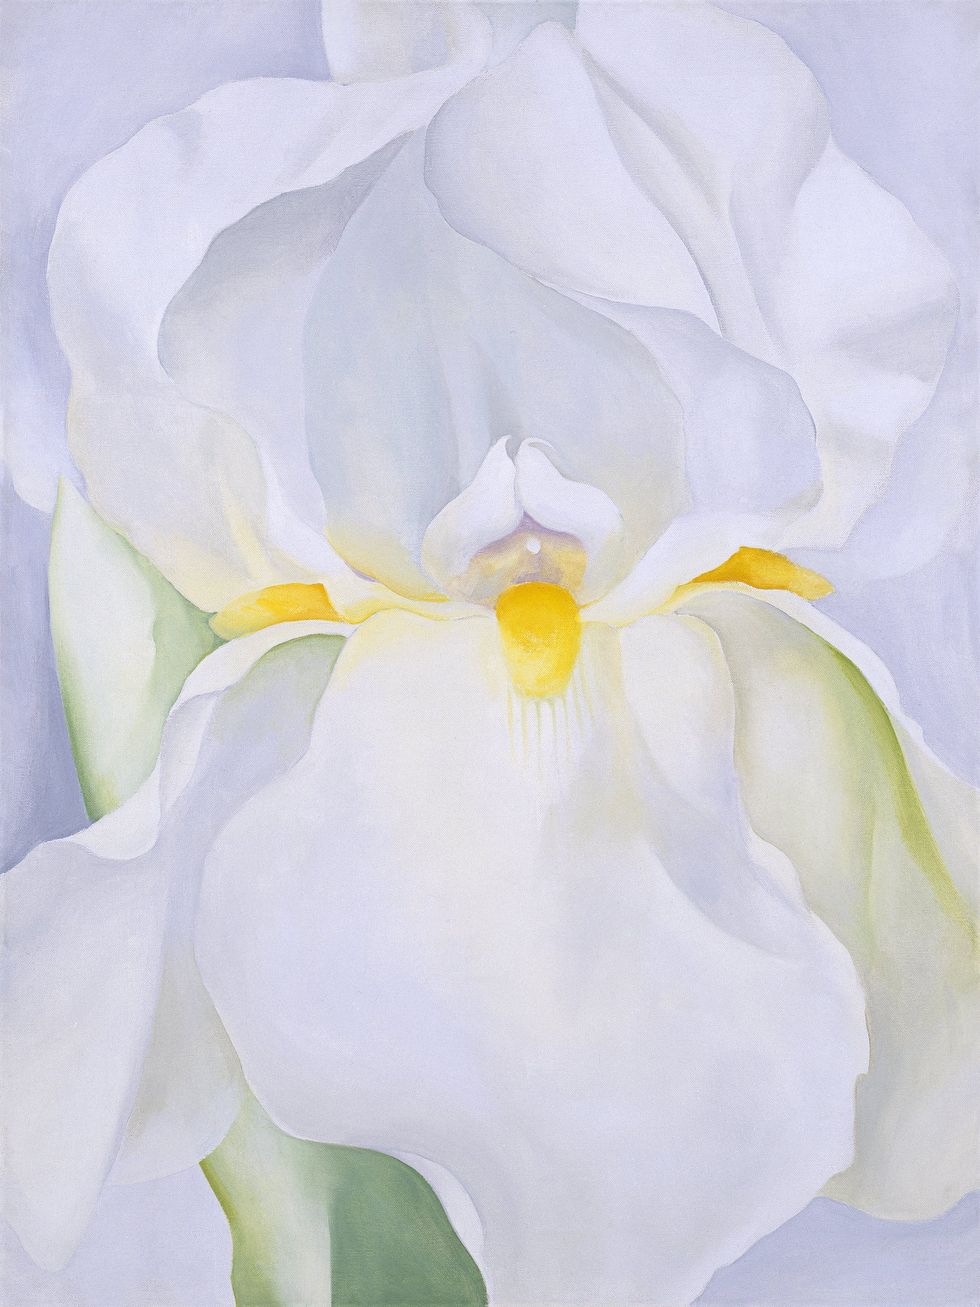 georgia o'keeffe, iris blanc, flower power, flower art, museo nacional thyssen bornemisza